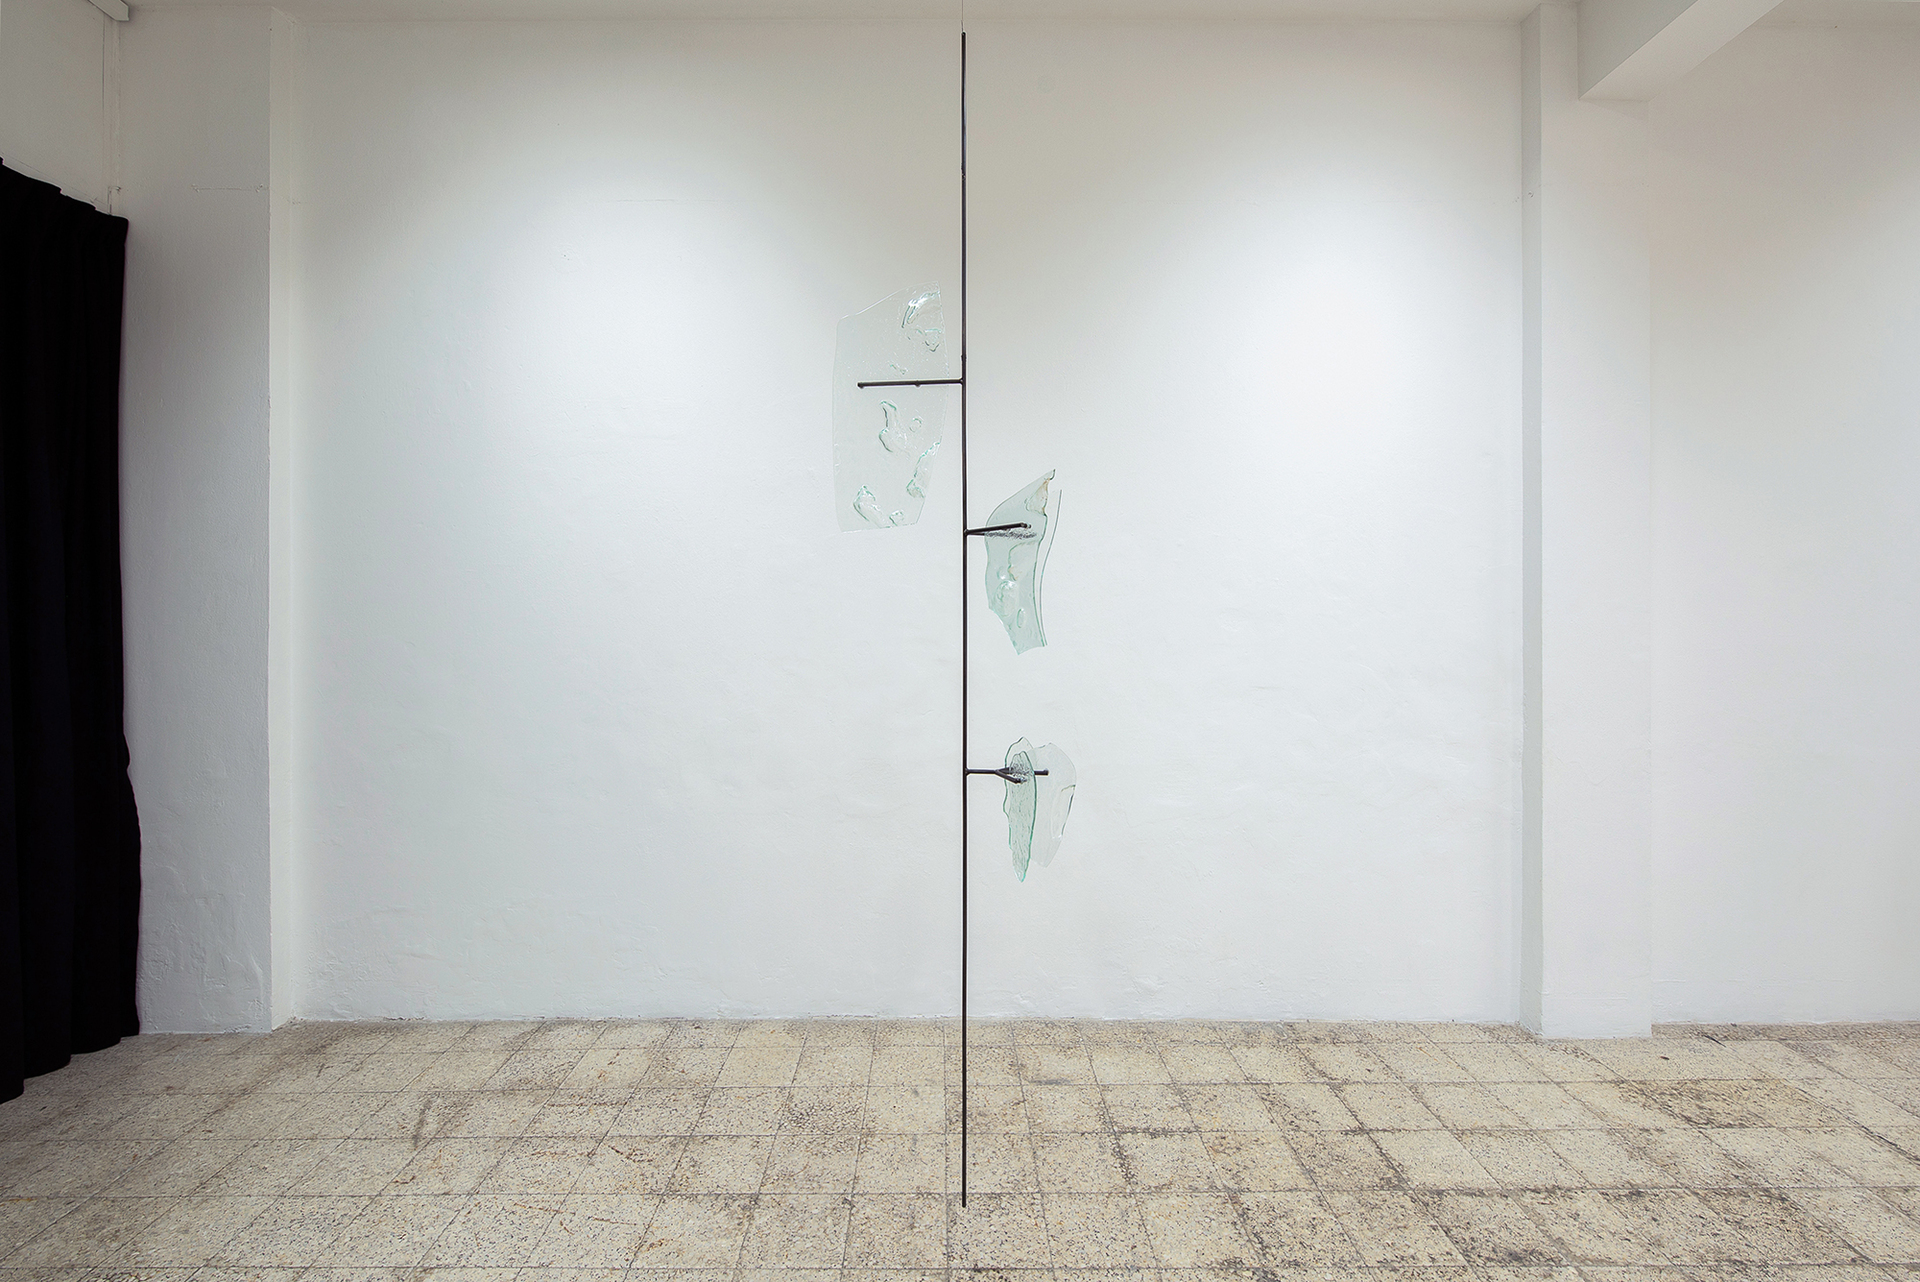 3 Leontios Toumpouris – To maintain patency #1, 2022, mild steel, fused glass, resin, 275 x 60 x 40 cm.